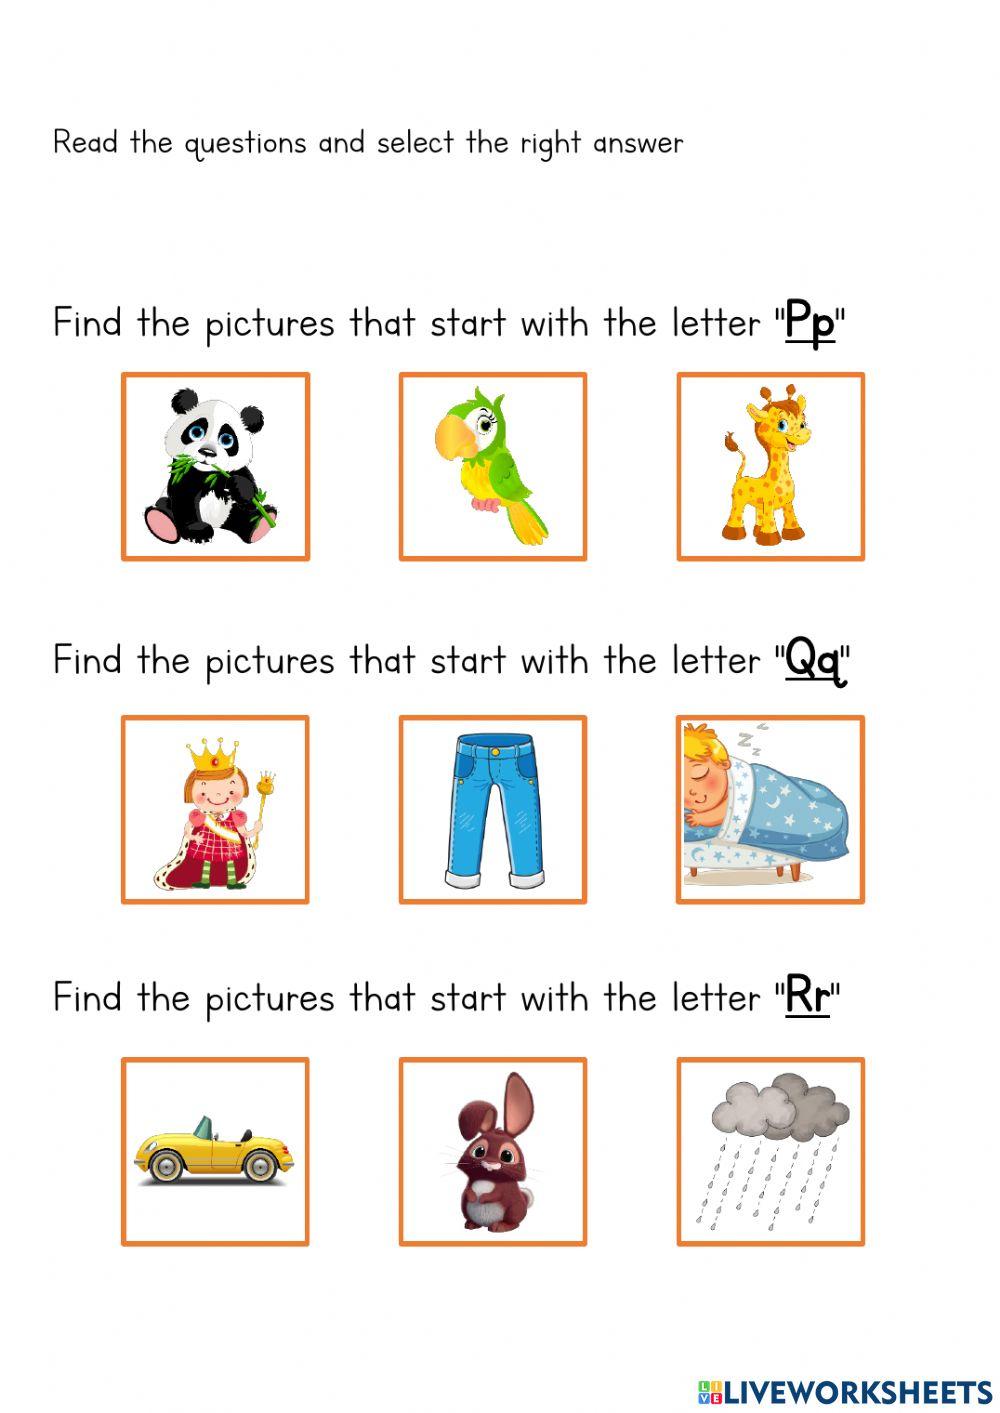 Child evaluation (Alphabets)